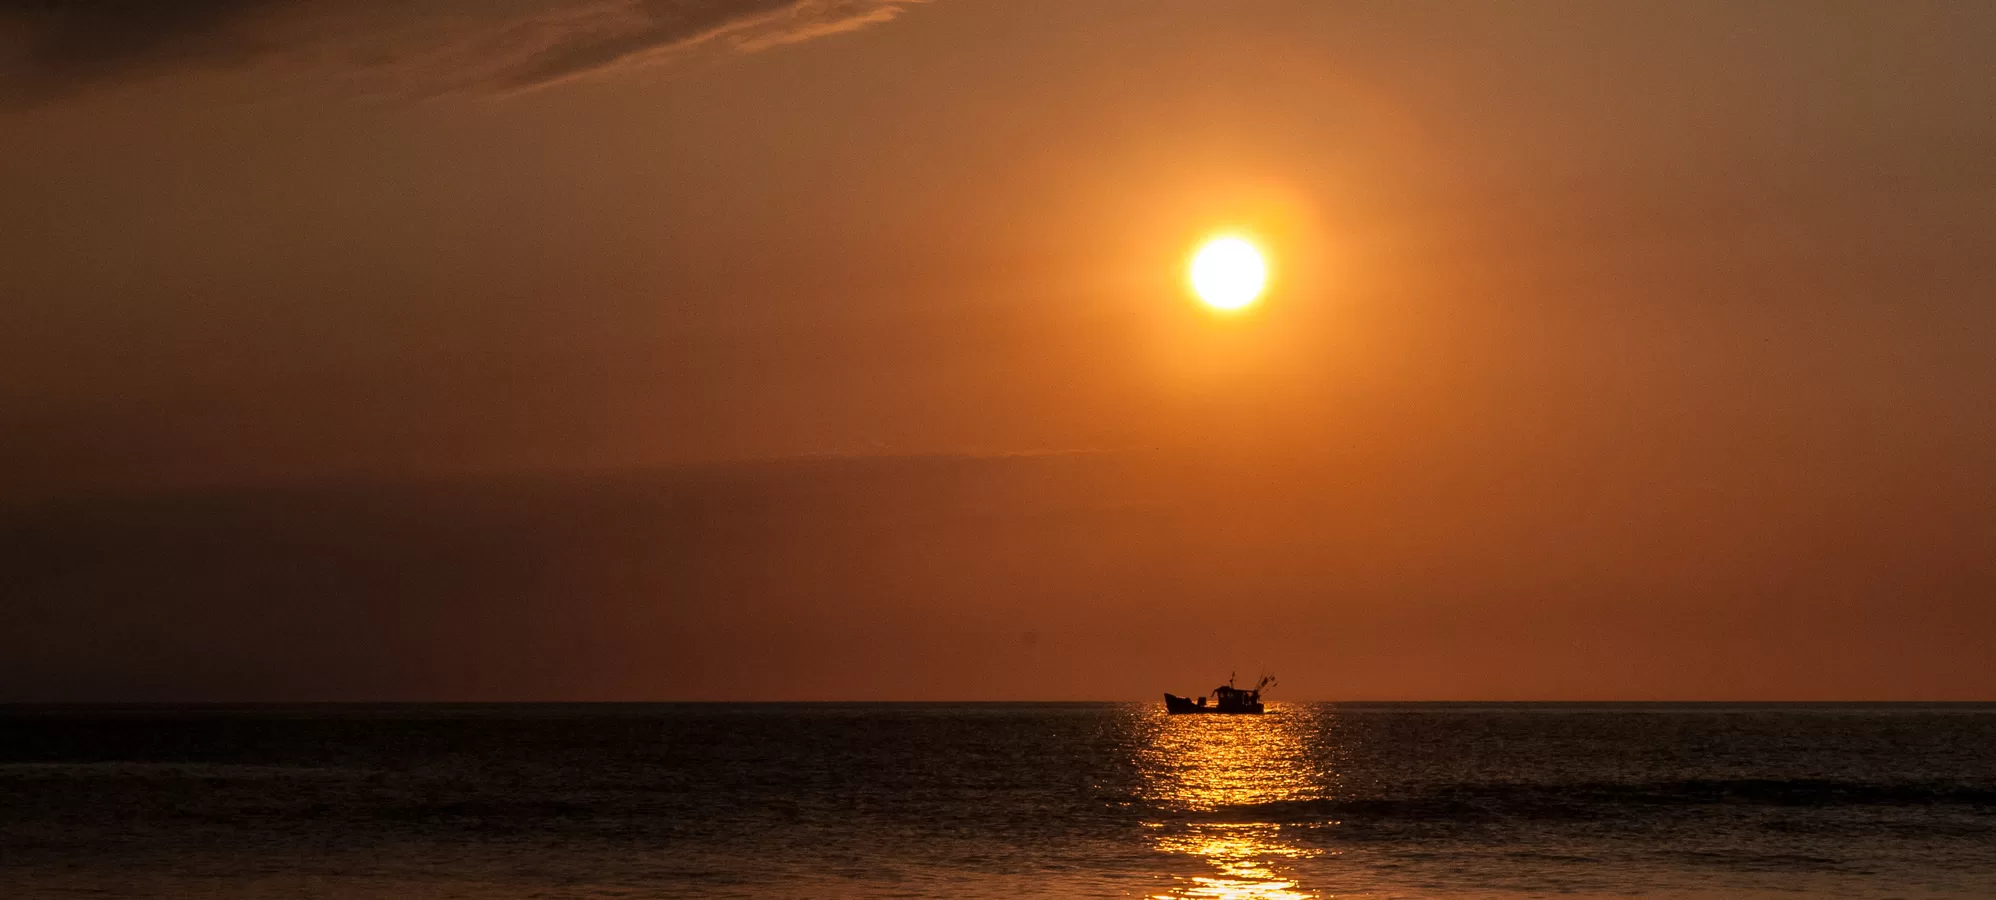 Boat at Sea, Sunset, Orange